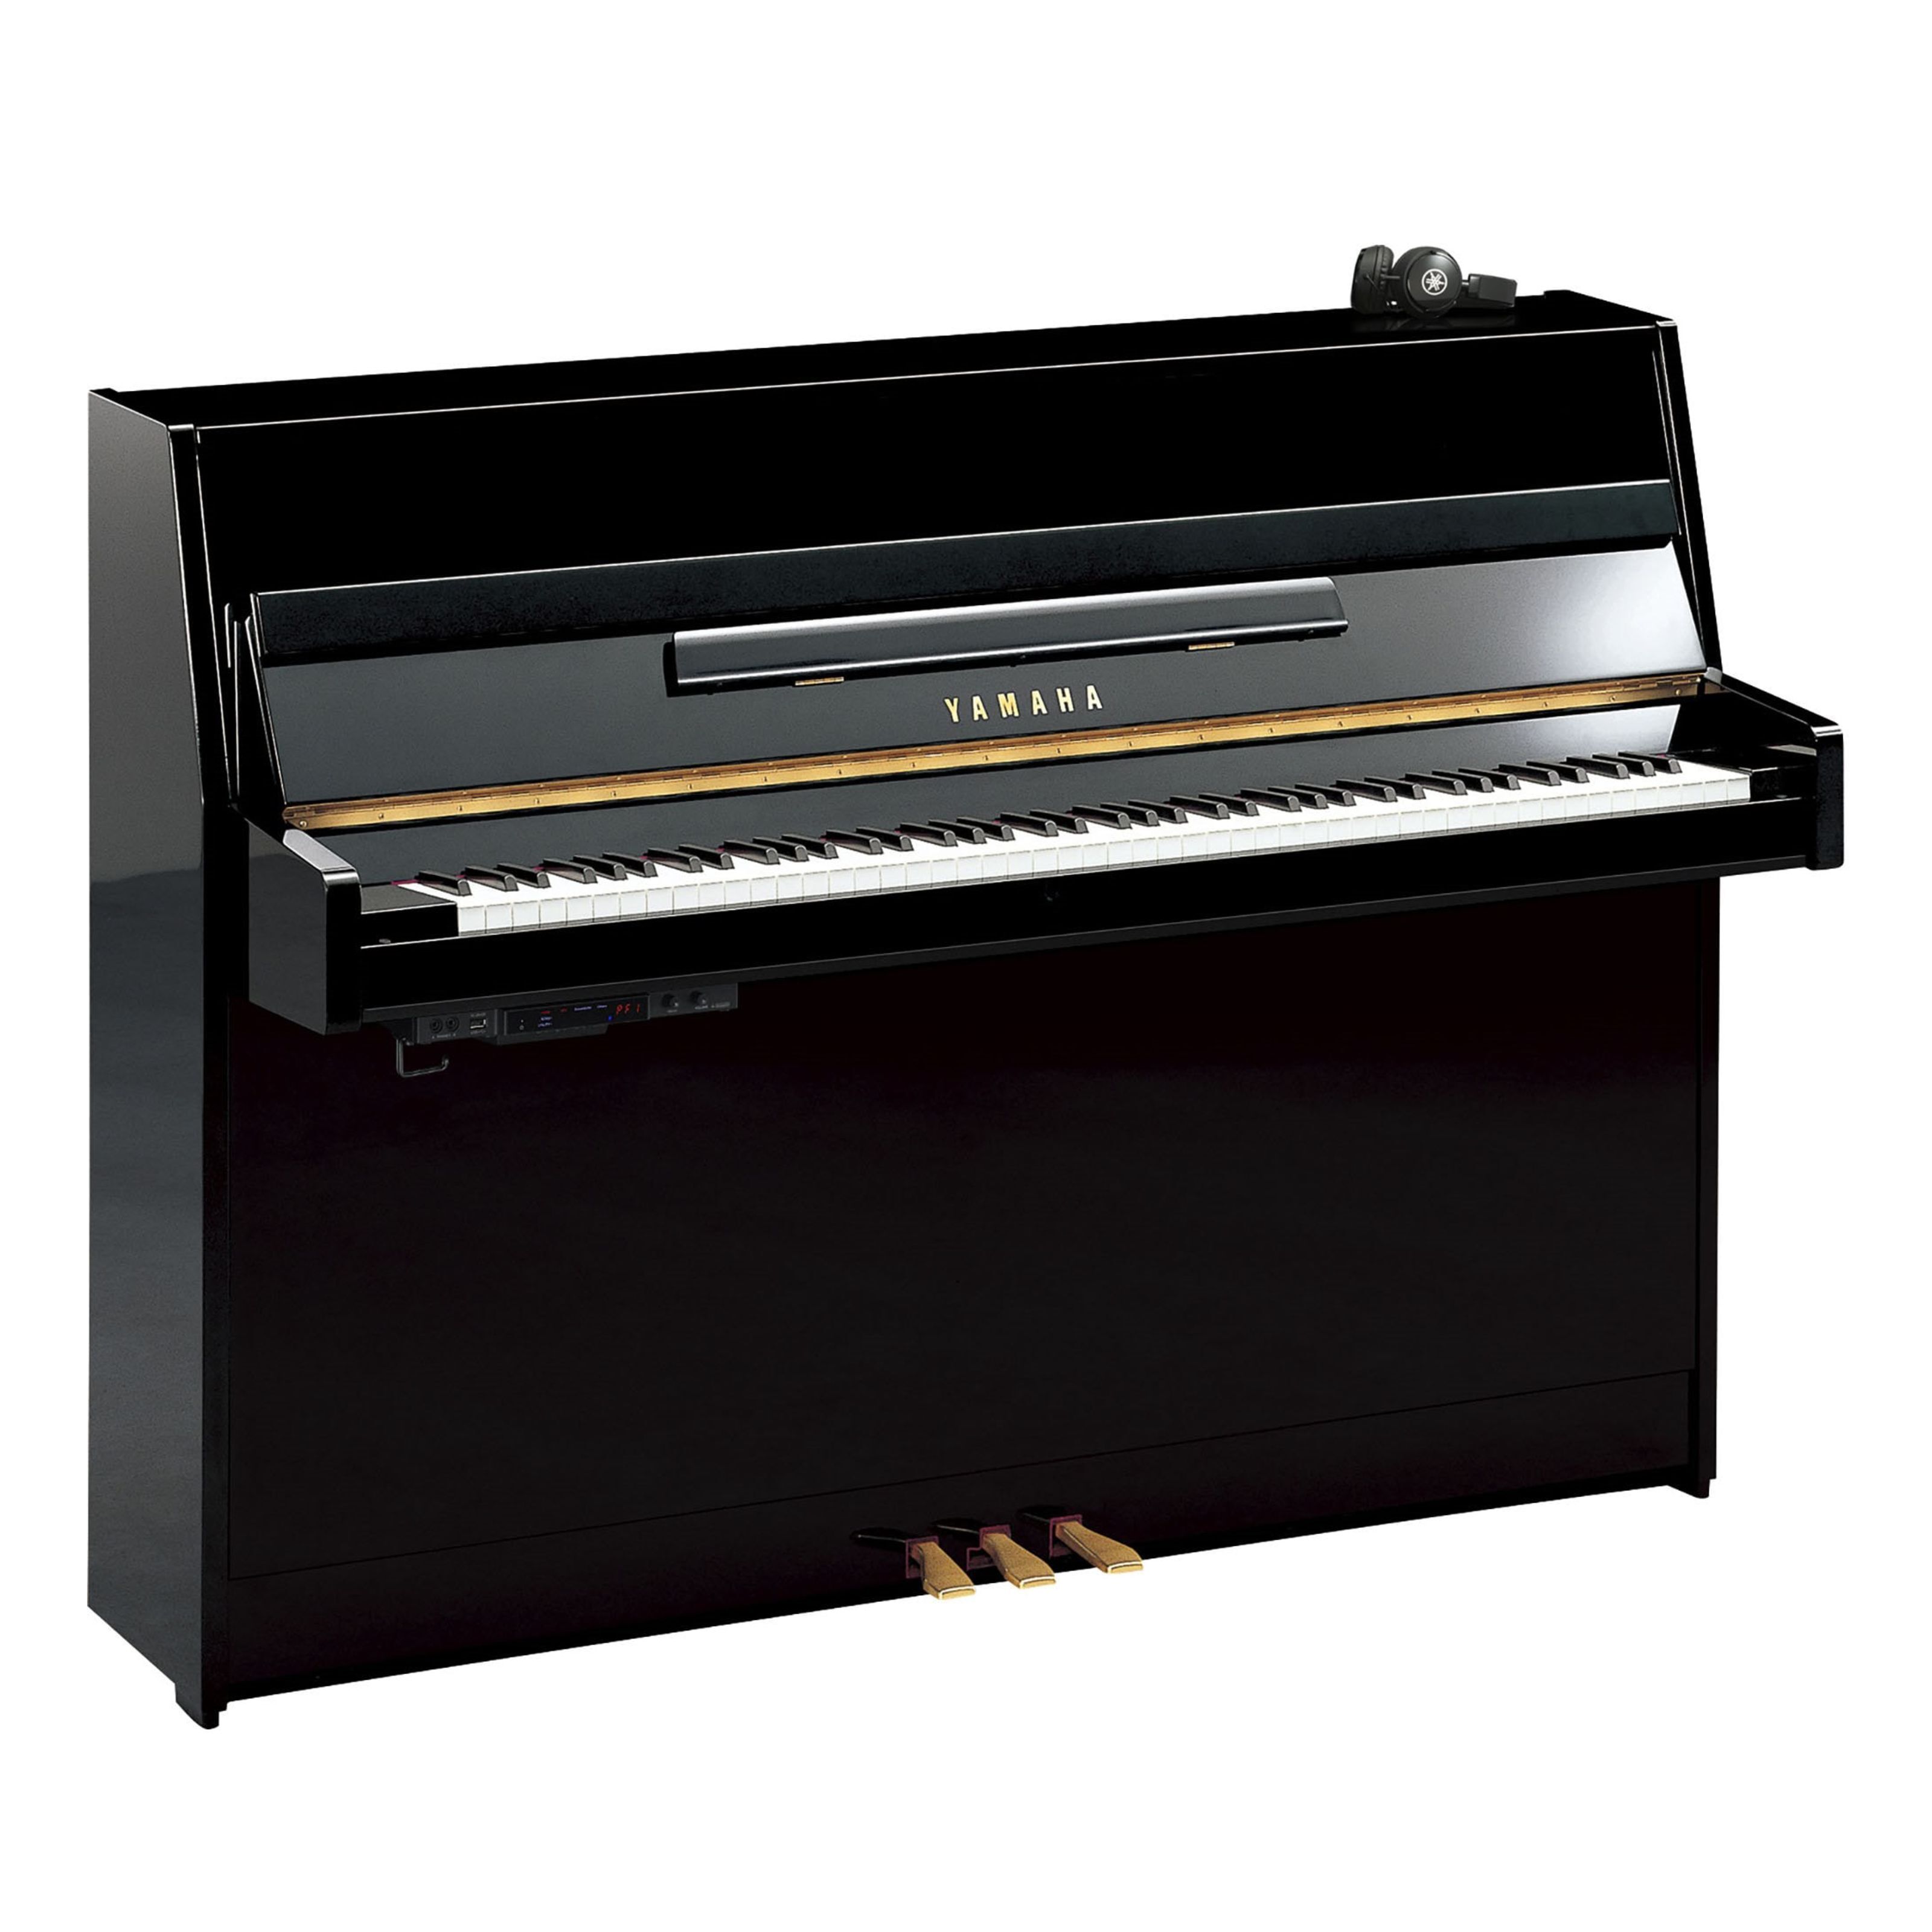 Yamaha B1 SC3 PE, 109cm schw. pol., Messing-Beschläge - Hybrid Piano